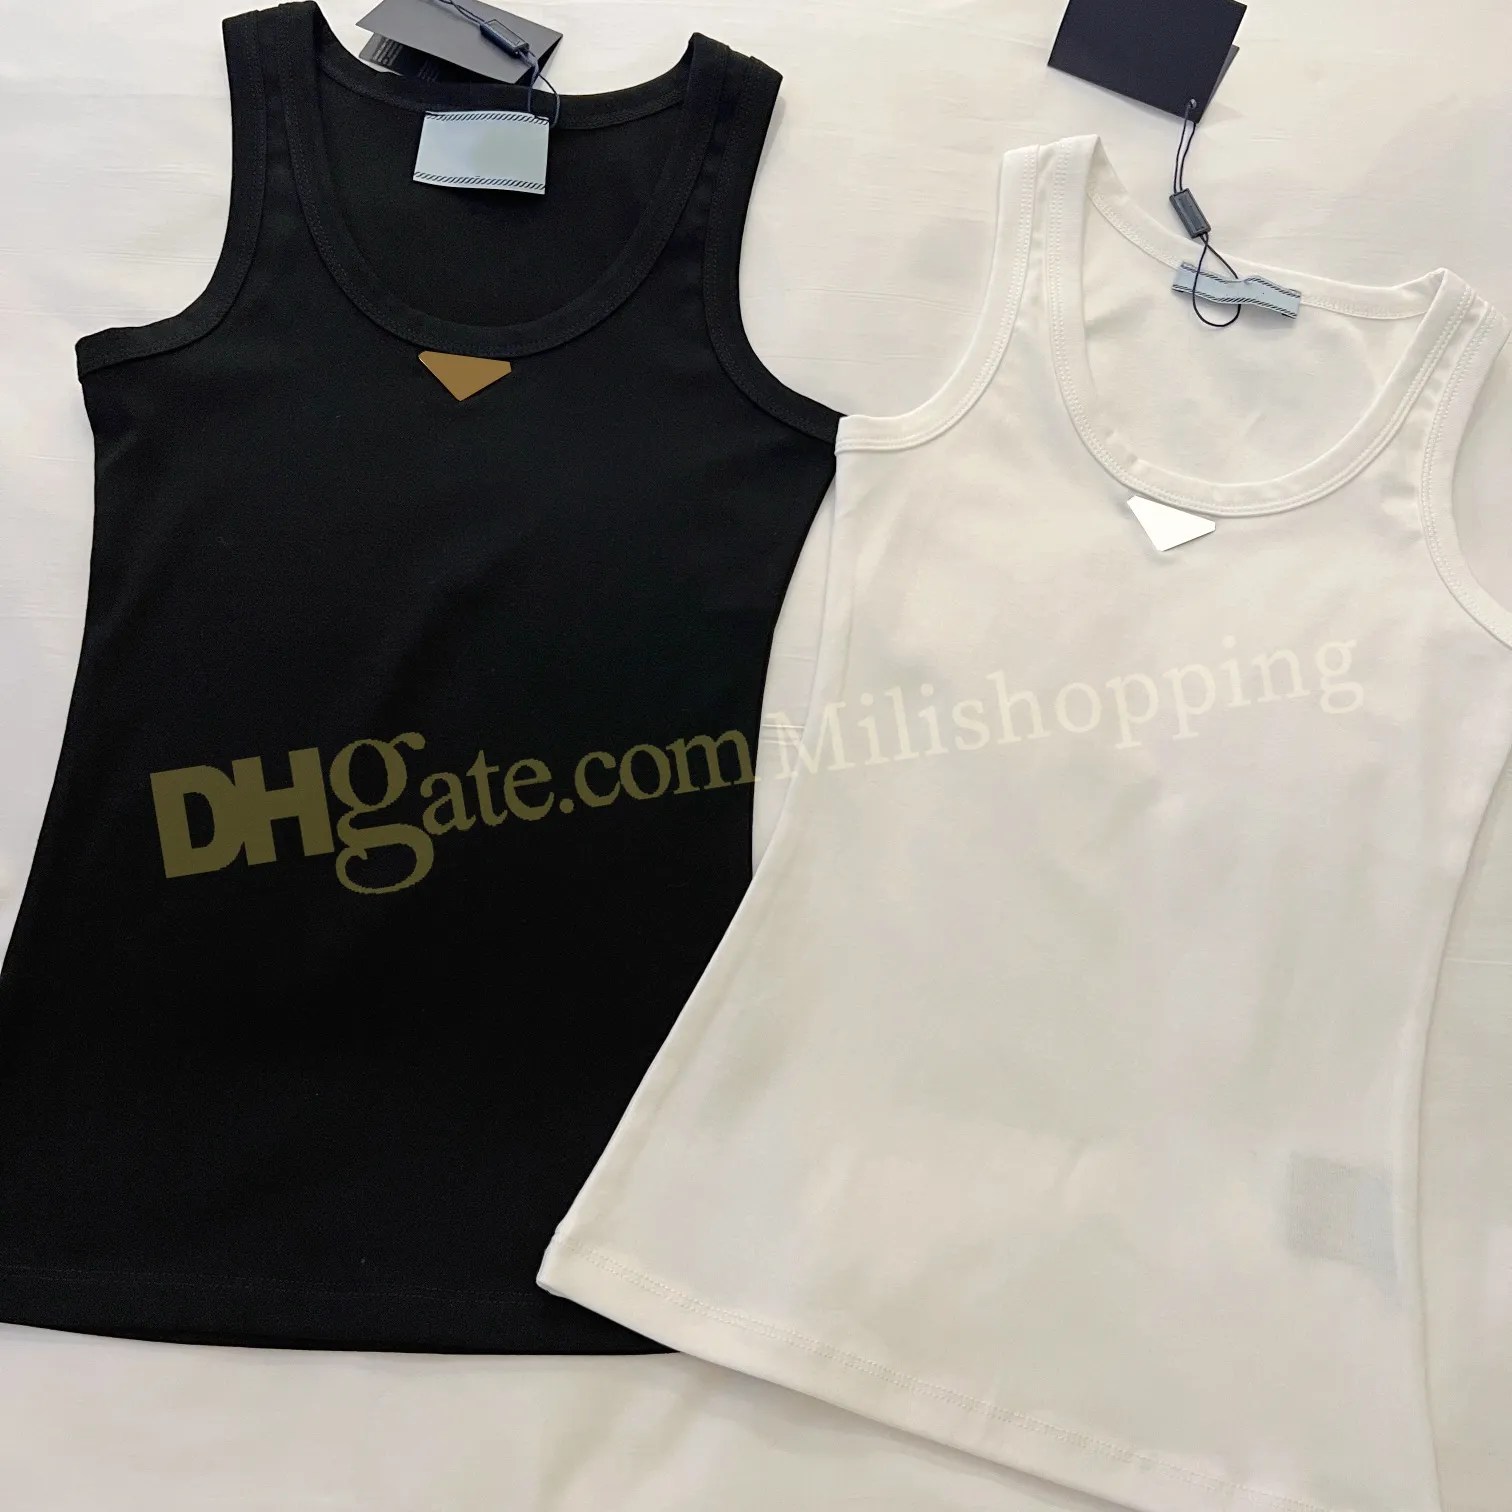 Mode Damenbekleidung Designer Weste Frauen gestrickt ärmelloses Top bestickte Buchstaben T-Shirt schlanke lässige Pullover Tanktops S-XL